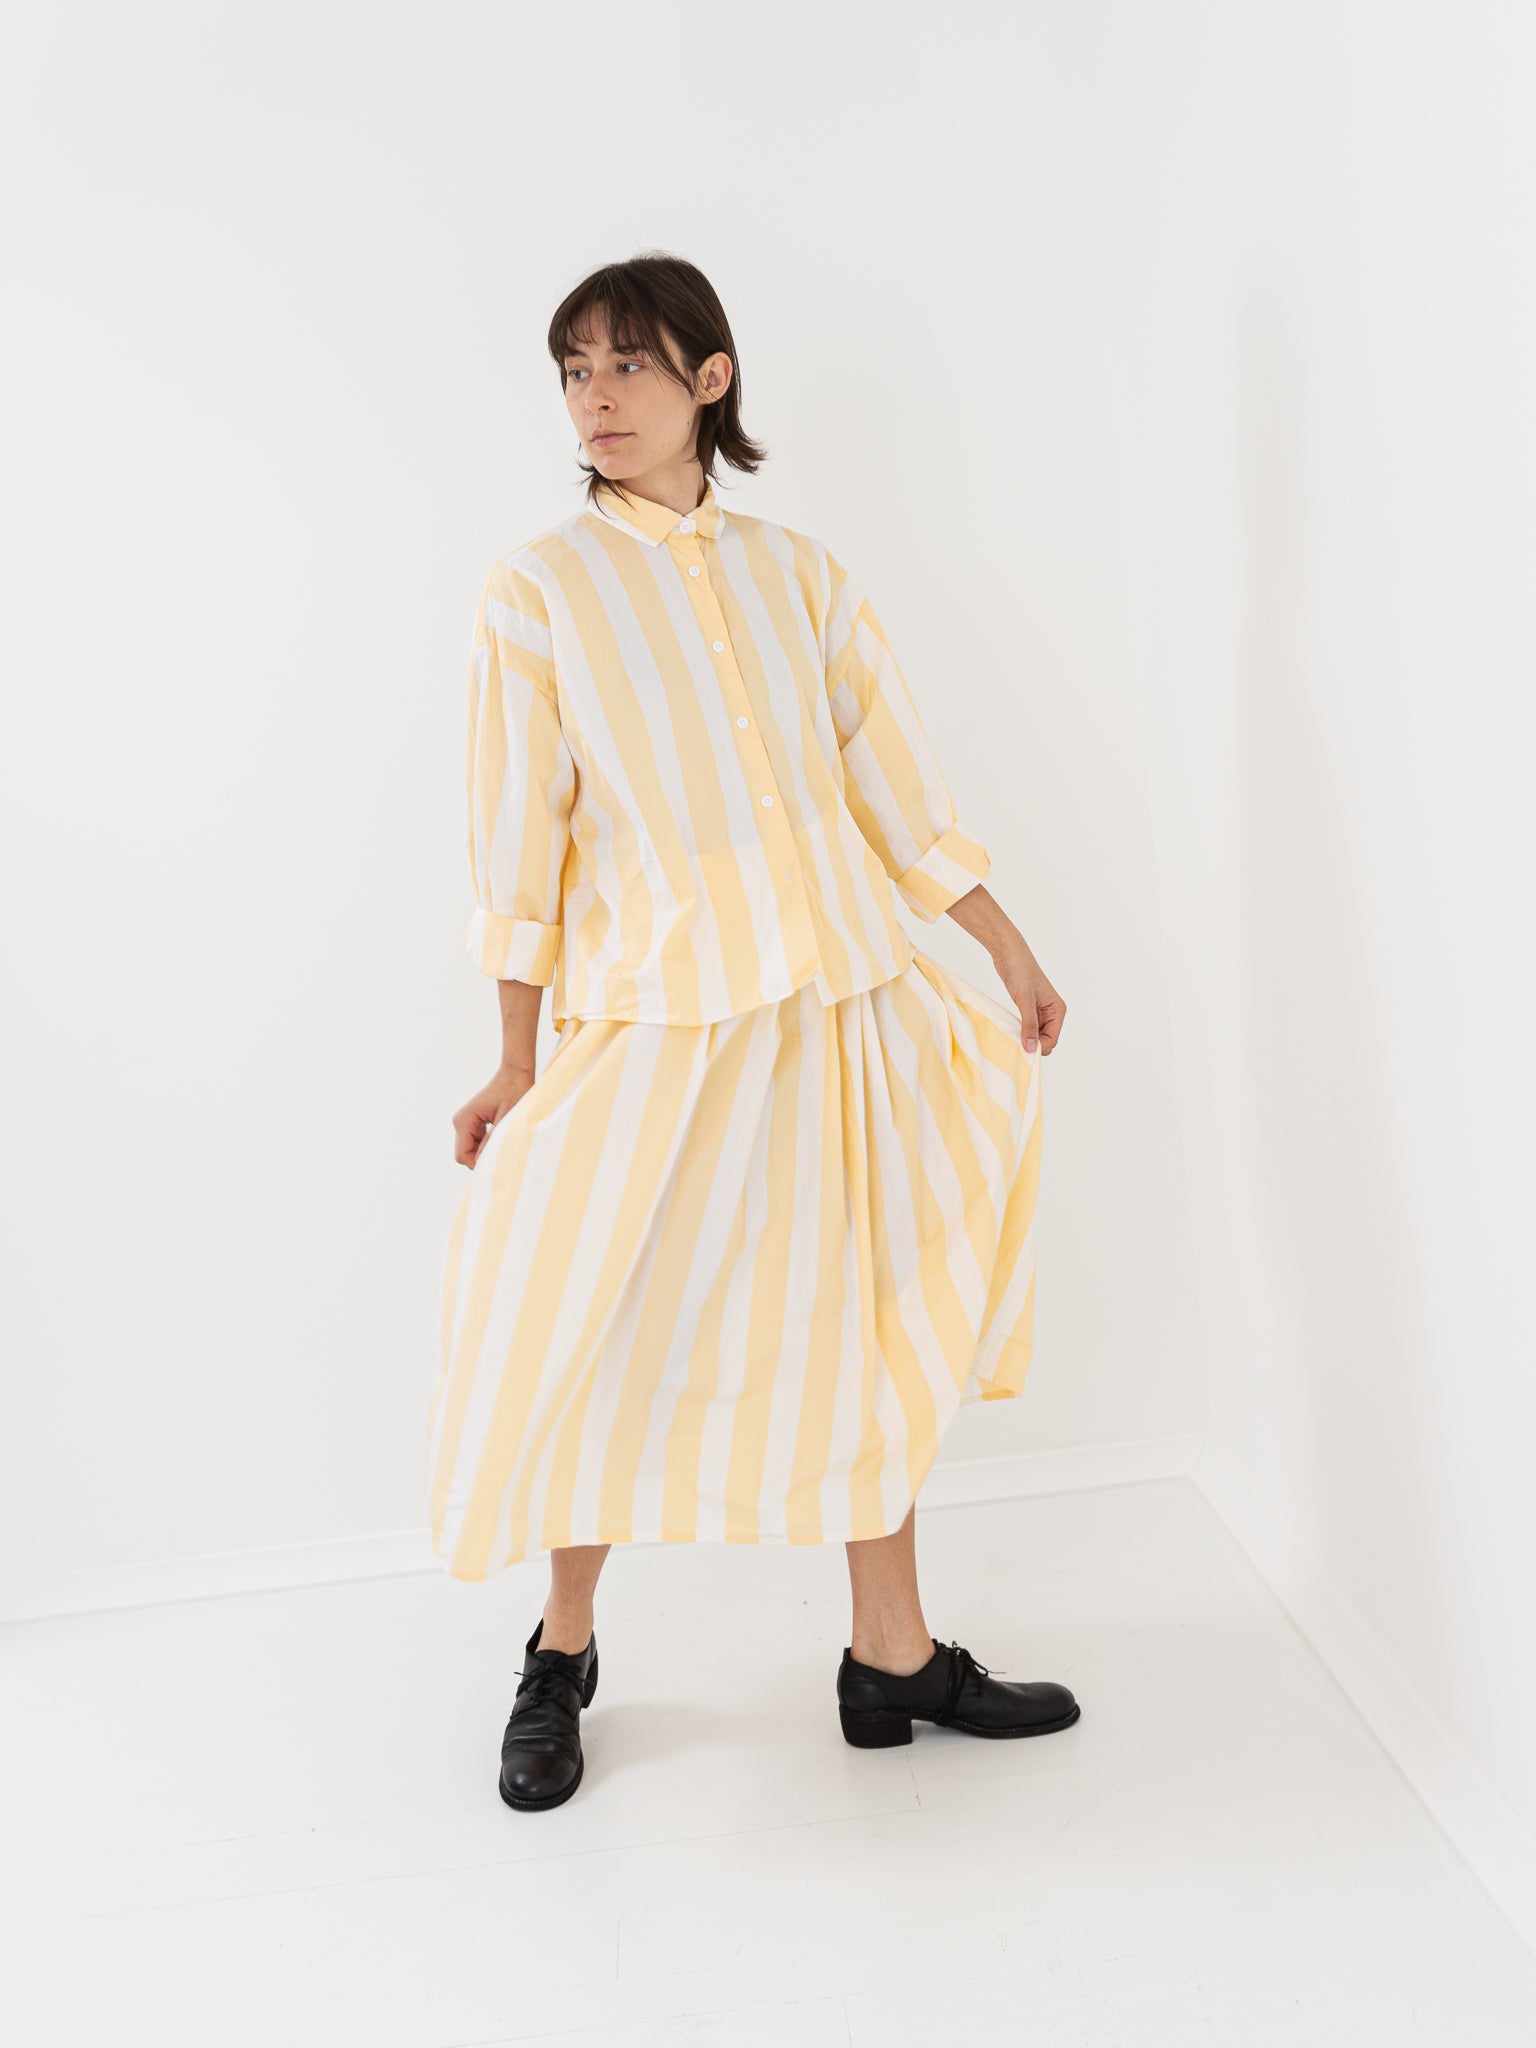 Bergfabel Matilde Skirt, Yellow Stripe - Worthwhile, Inc.